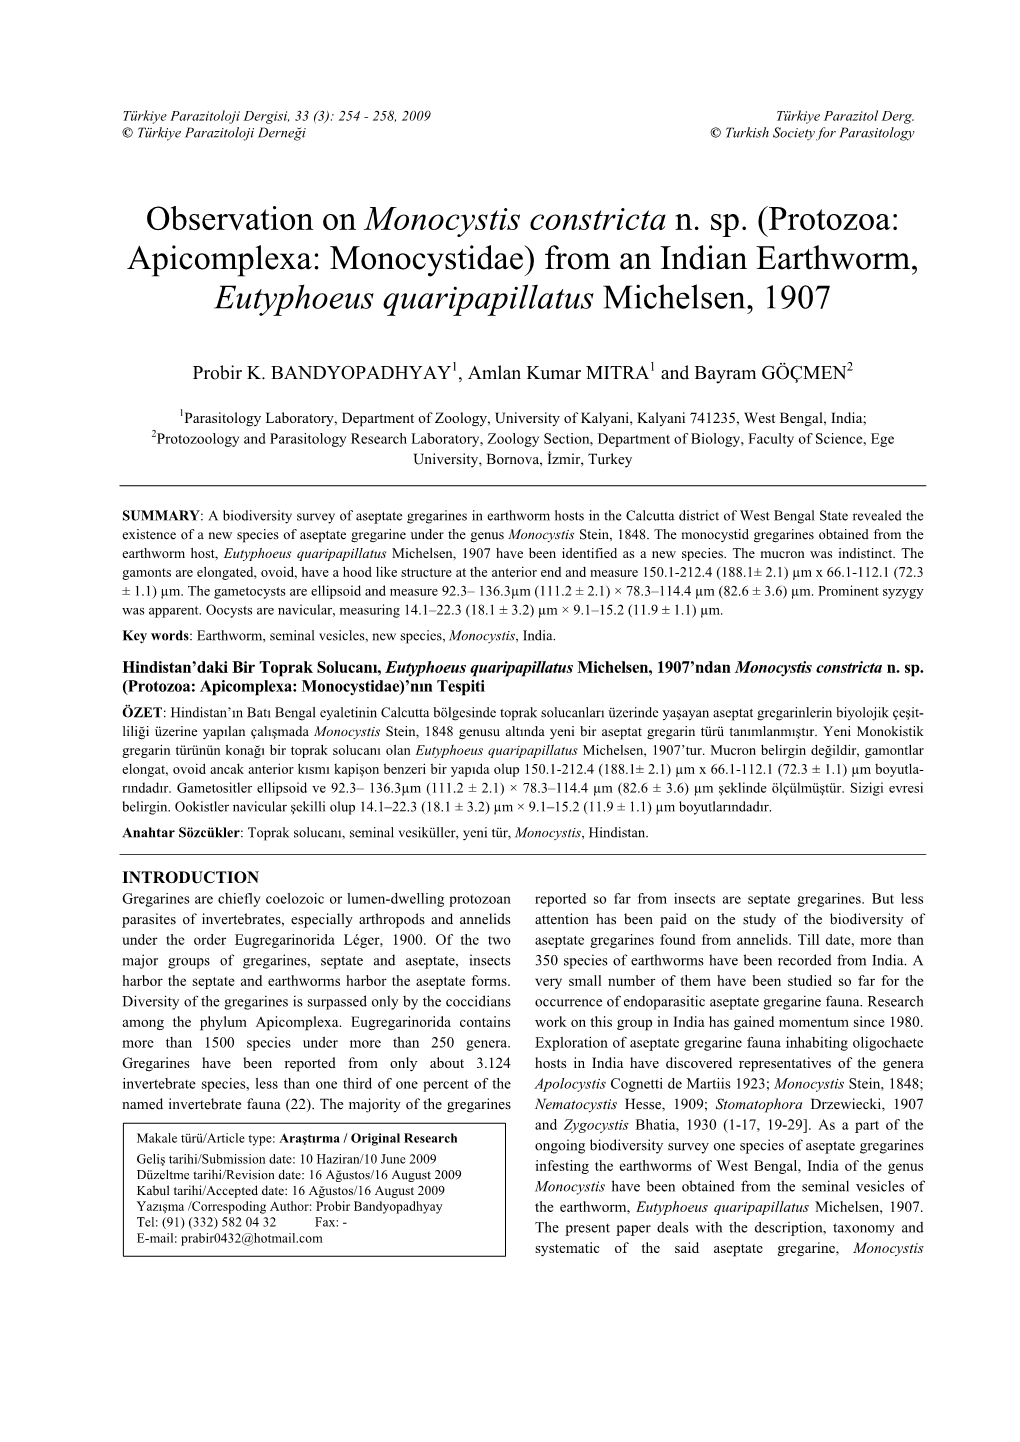 Observation on Monocystis Constricta N. Sp. (Protozoa: Apicomplexa: Monocystidae) from an Indian Earthworm, Eutyphoeus Quaripapillatus Michelsen, 1907